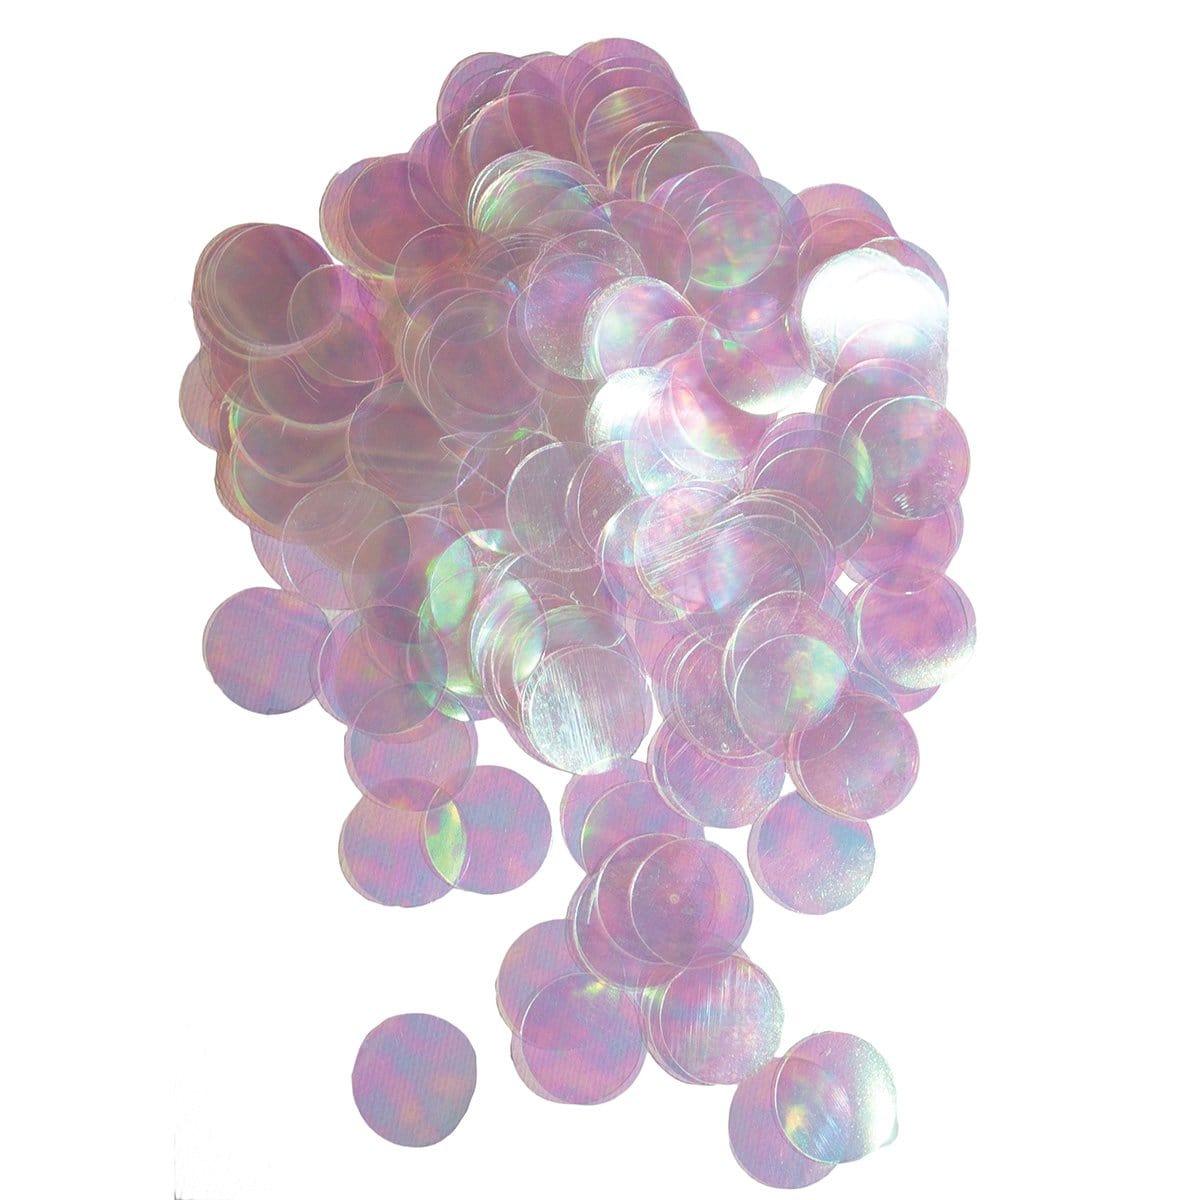 Buy Balloons Iridescent Metallic Circle Confetti sold at Party Expert